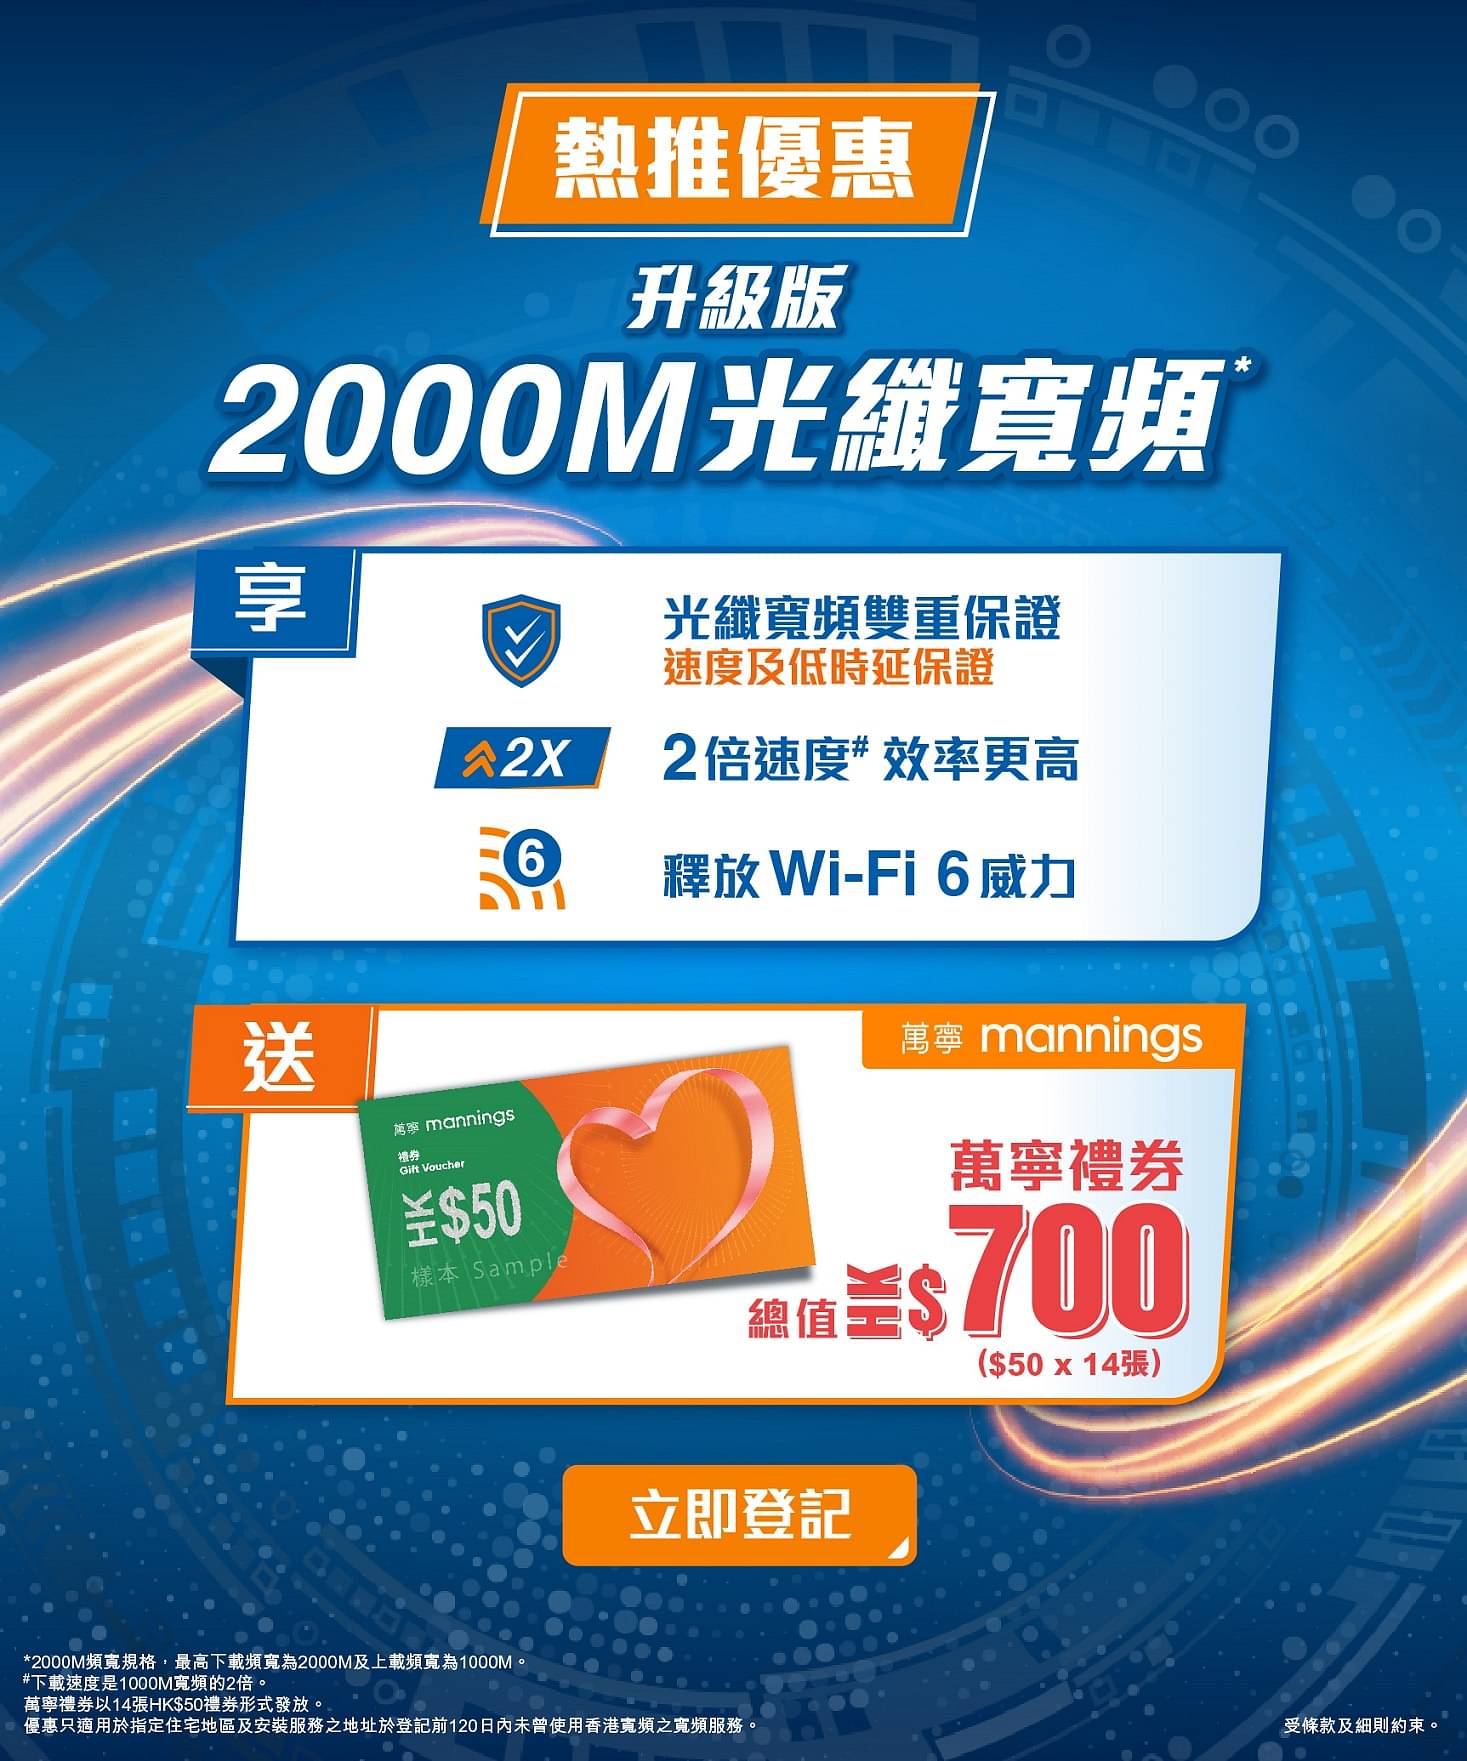 Hkbn 香港寬頻升級版2000M光纖寬頻限時優惠：送$700萬寧禮券- 慳家網購懶人包